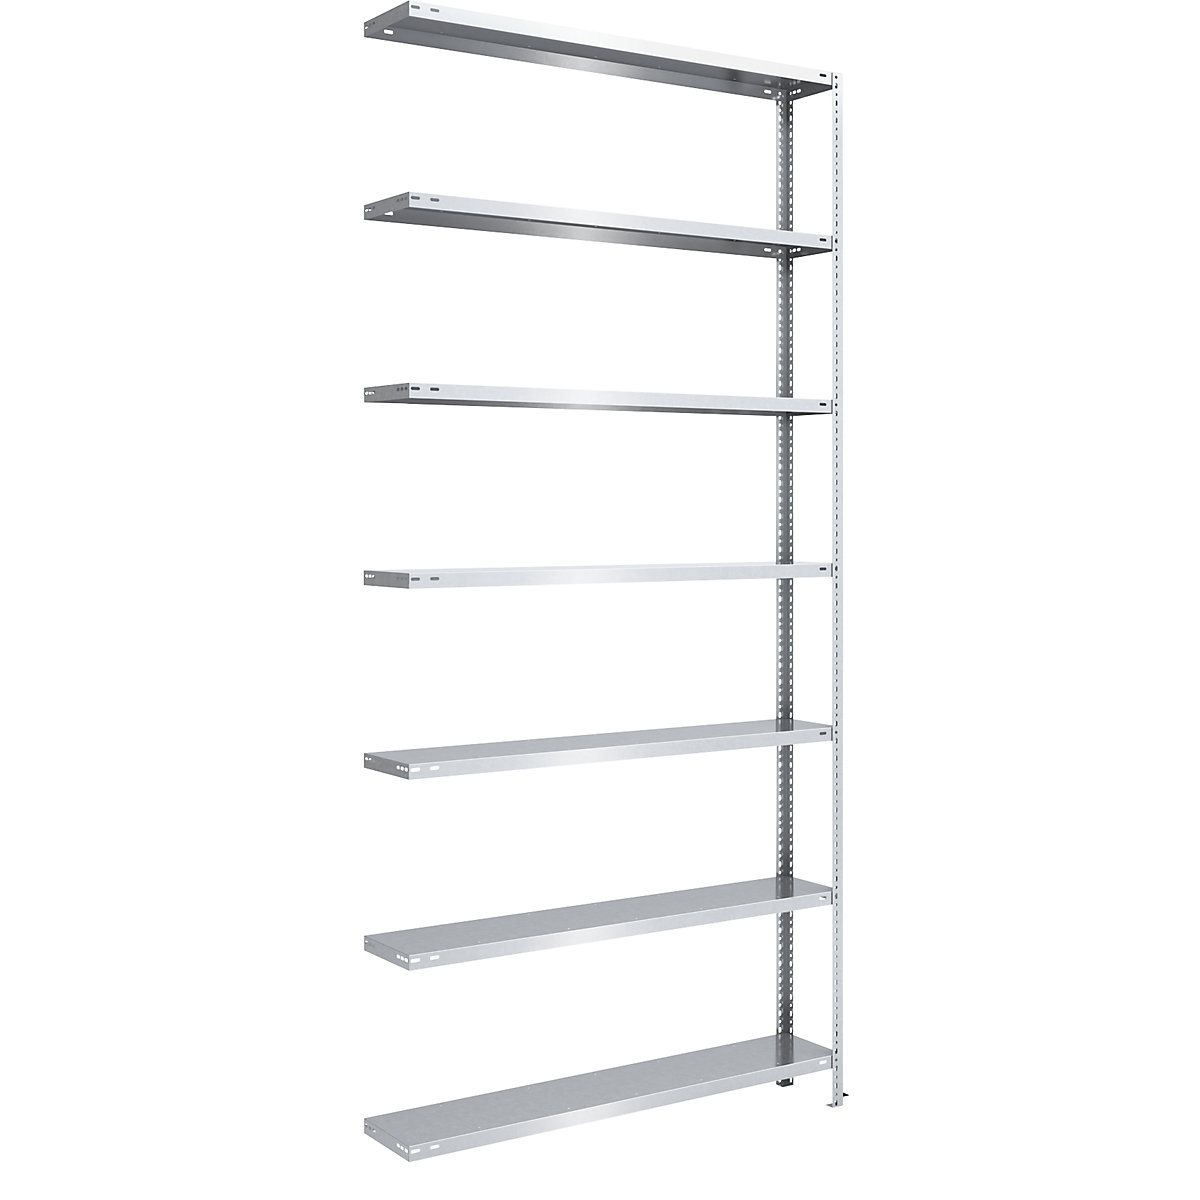 Bolt-together shelf unit, light duty, zinc plated – eurokraft pro